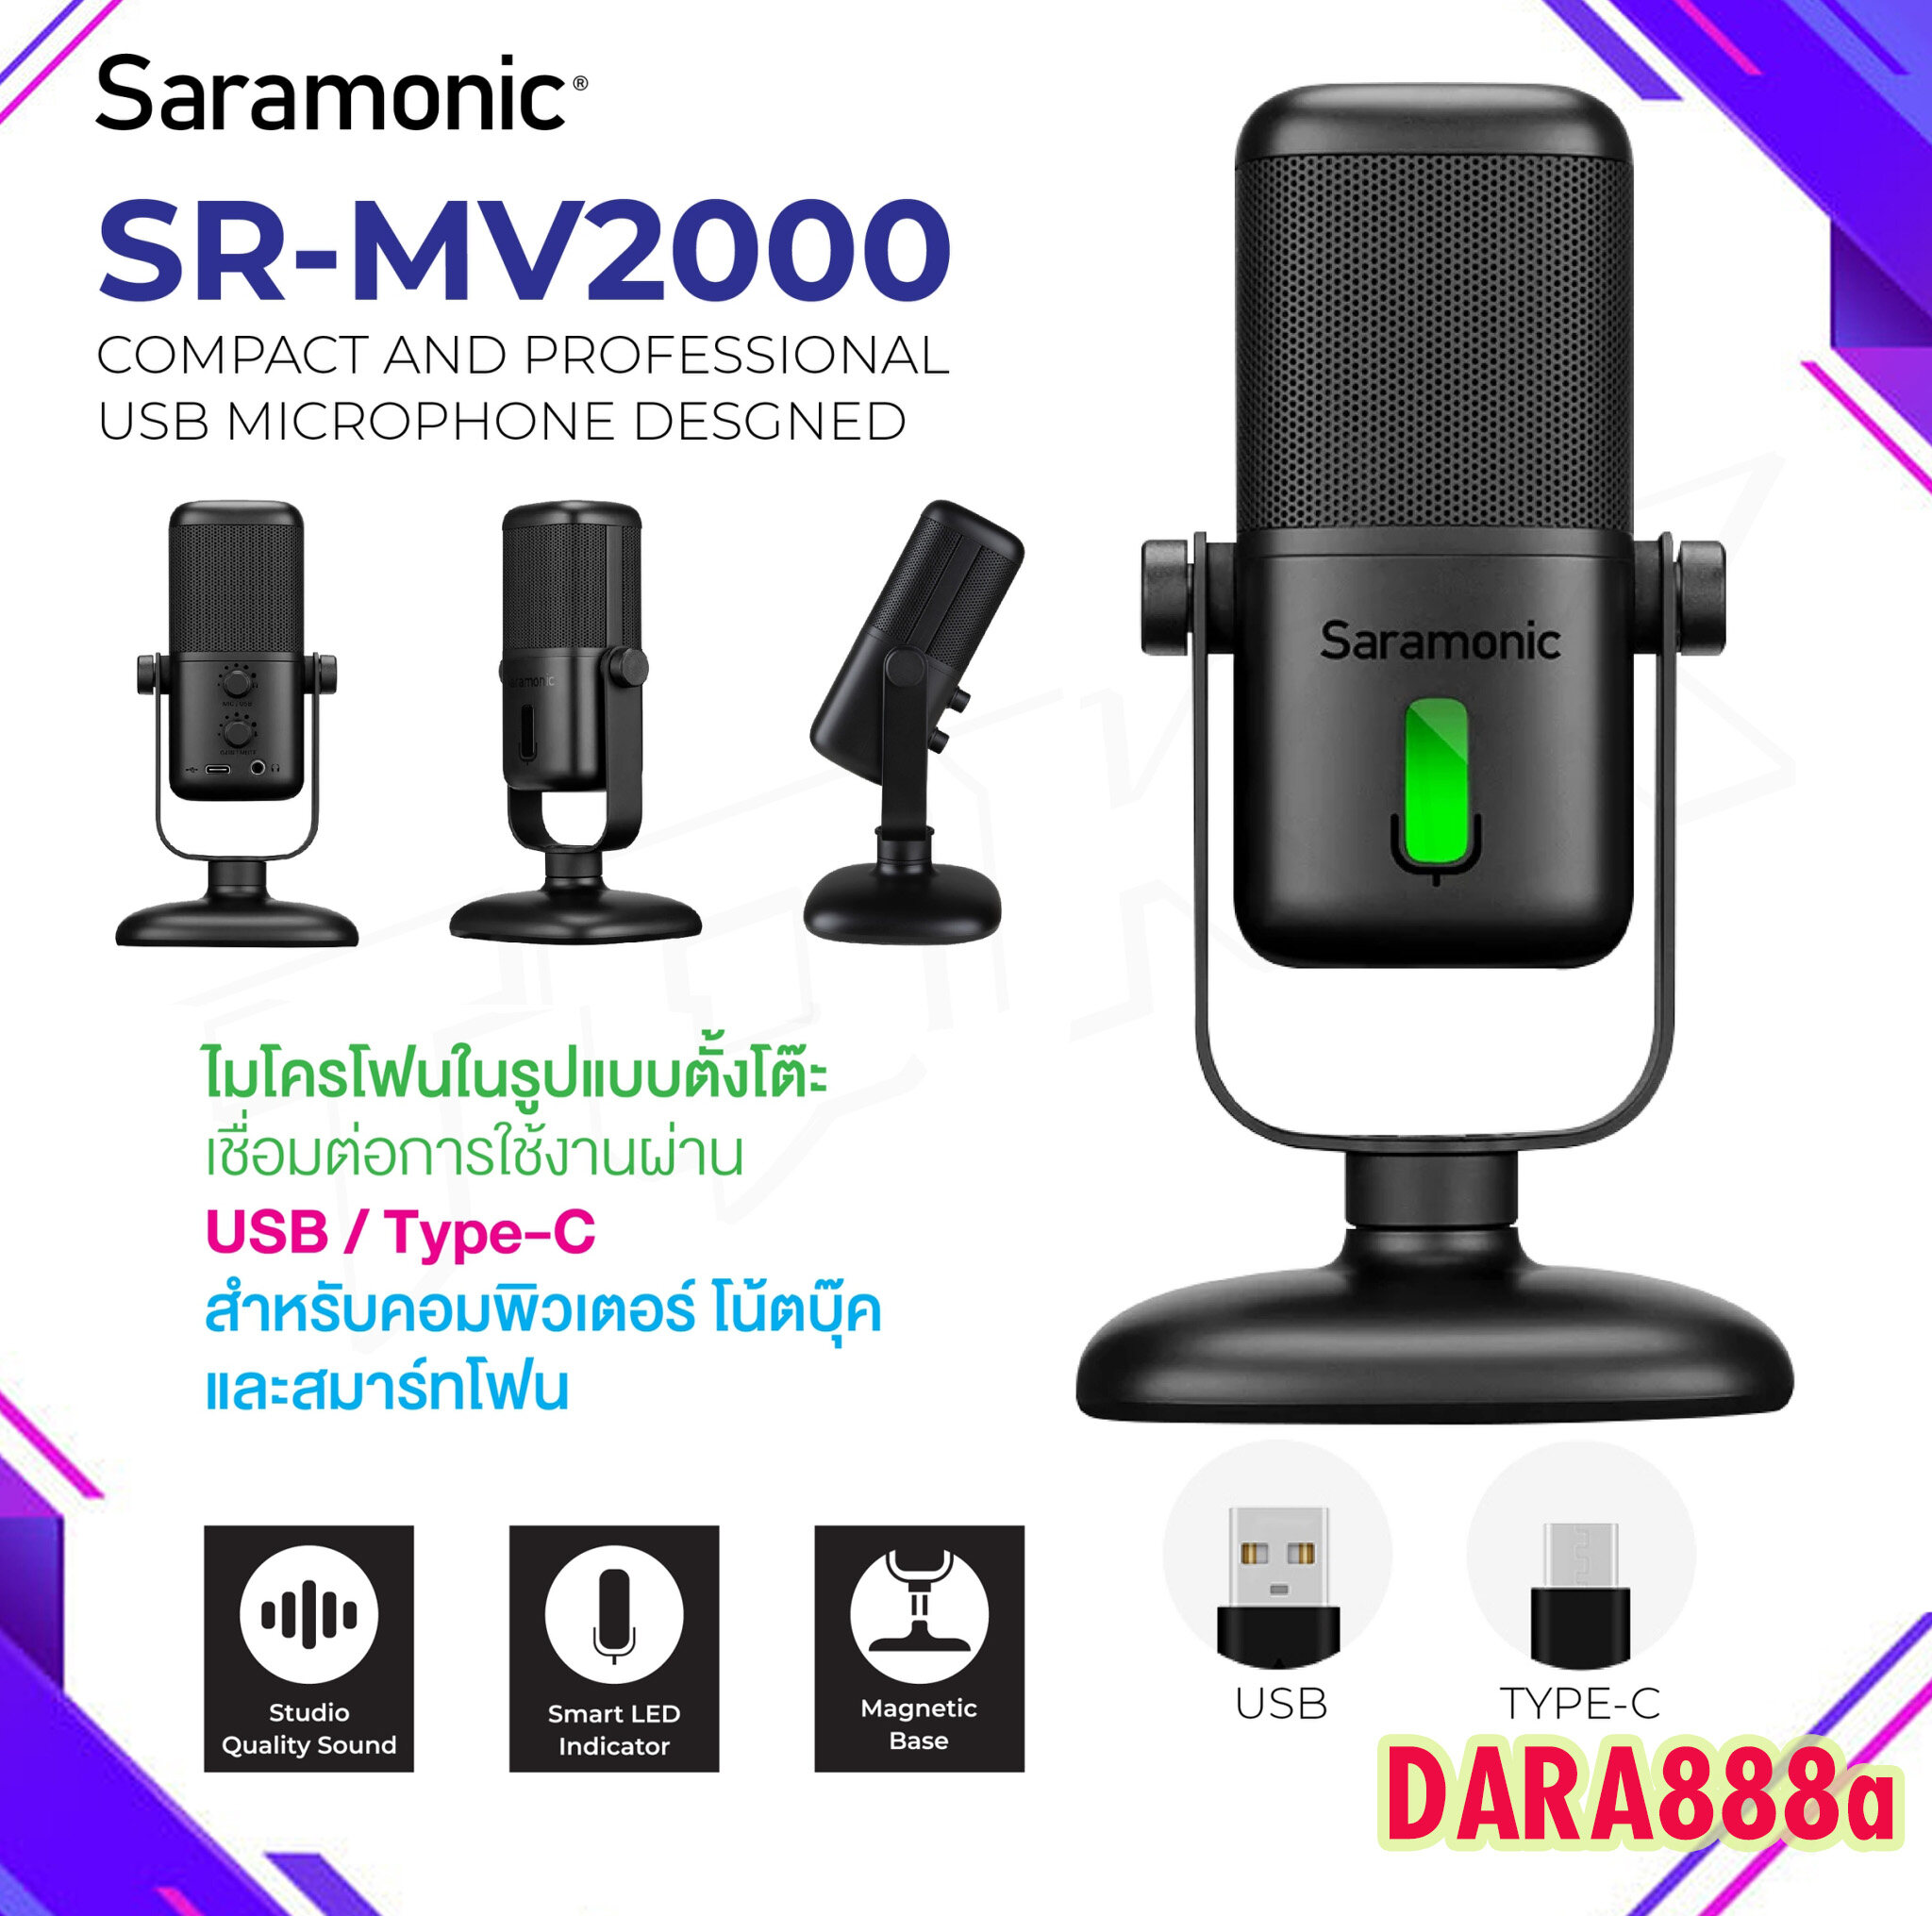 Saramonic SR-MV2000 USB MICROPHONE ไมโครโฟน คอนเดนเซอร์ รองรับสมาร์ทโฟน Type - C และ คอม/โน๊ตบุ๊ค ของแท้ 100�RA888A